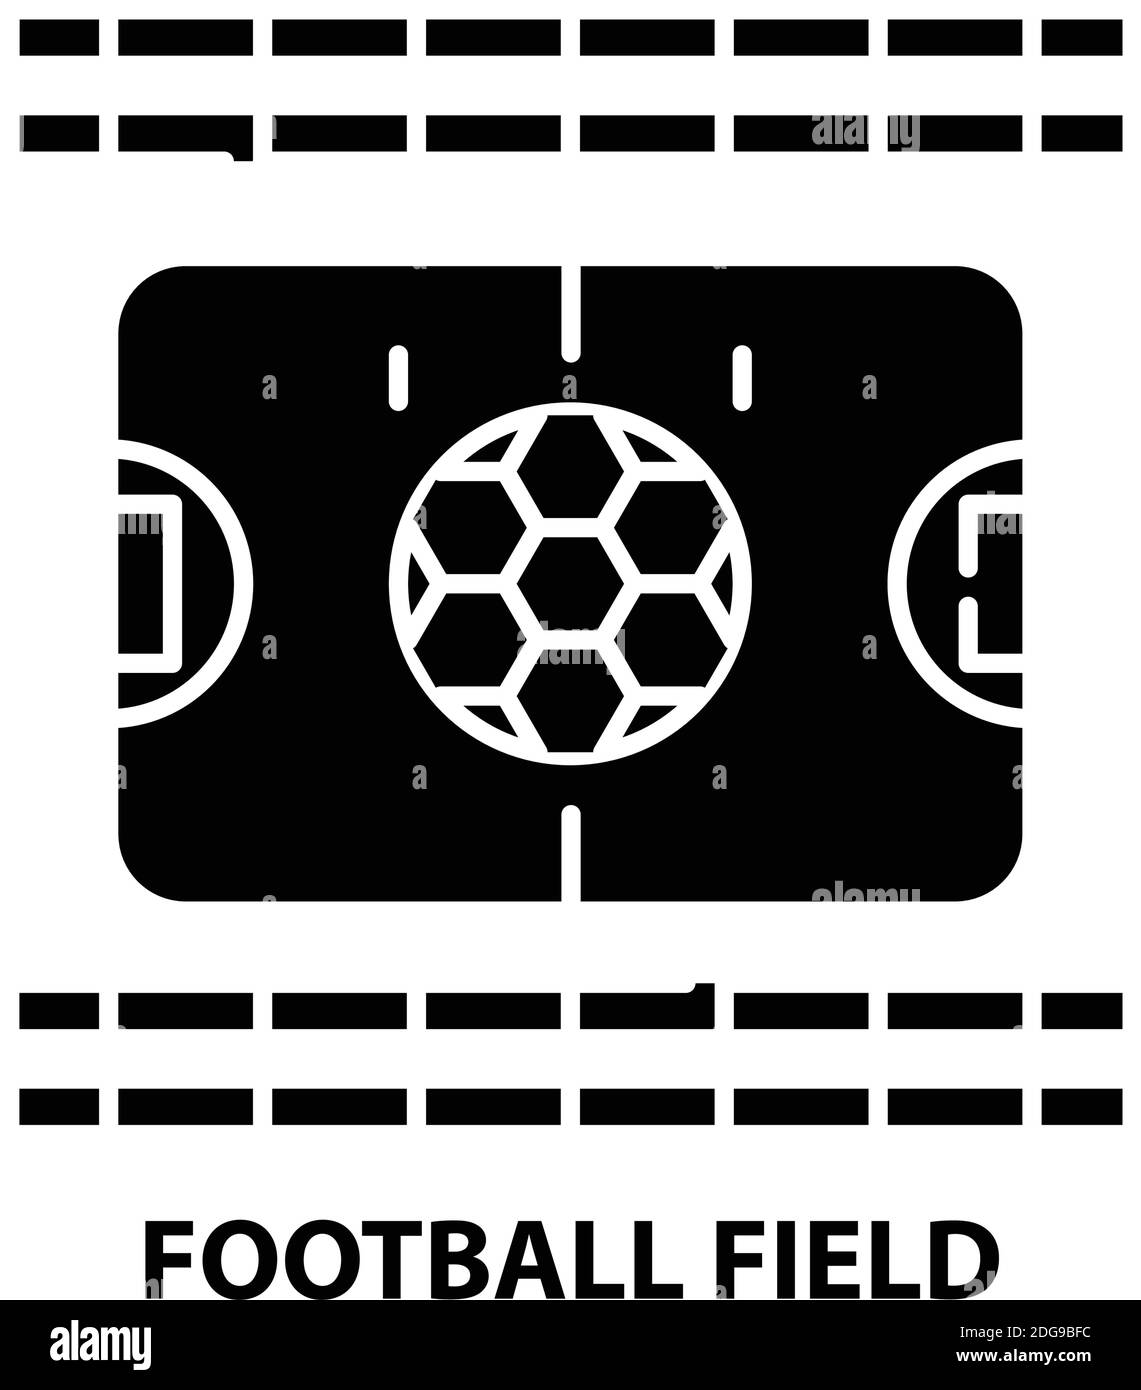 football field icon, black vector sign with editable strokes, concept illustration Stock Vector